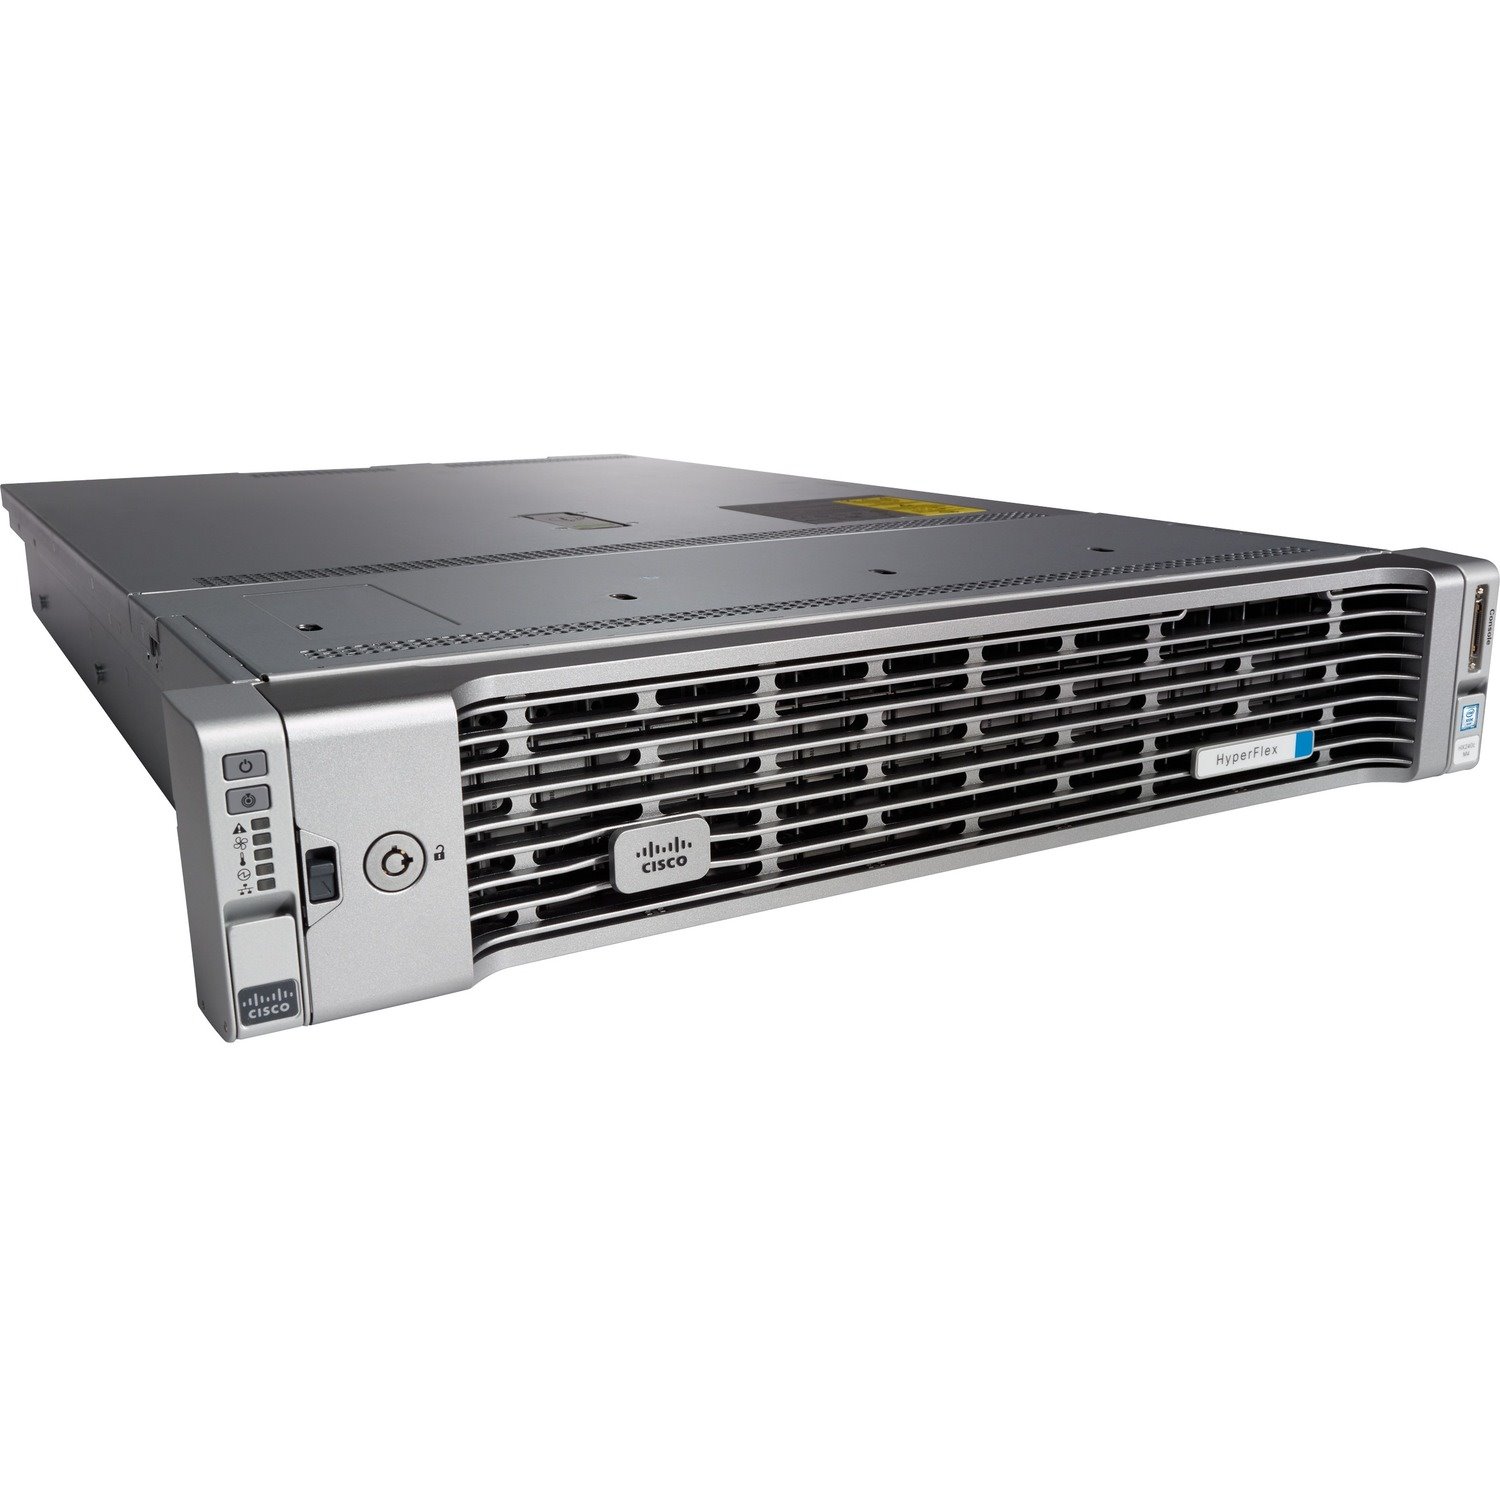 Cisco HyperFlex HX240c M4 2U Rack Server - 2 x Intel Xeon E5-2609 v4 1.70 GHz - 256 GB RAM - 12Gb/s SAS Controller